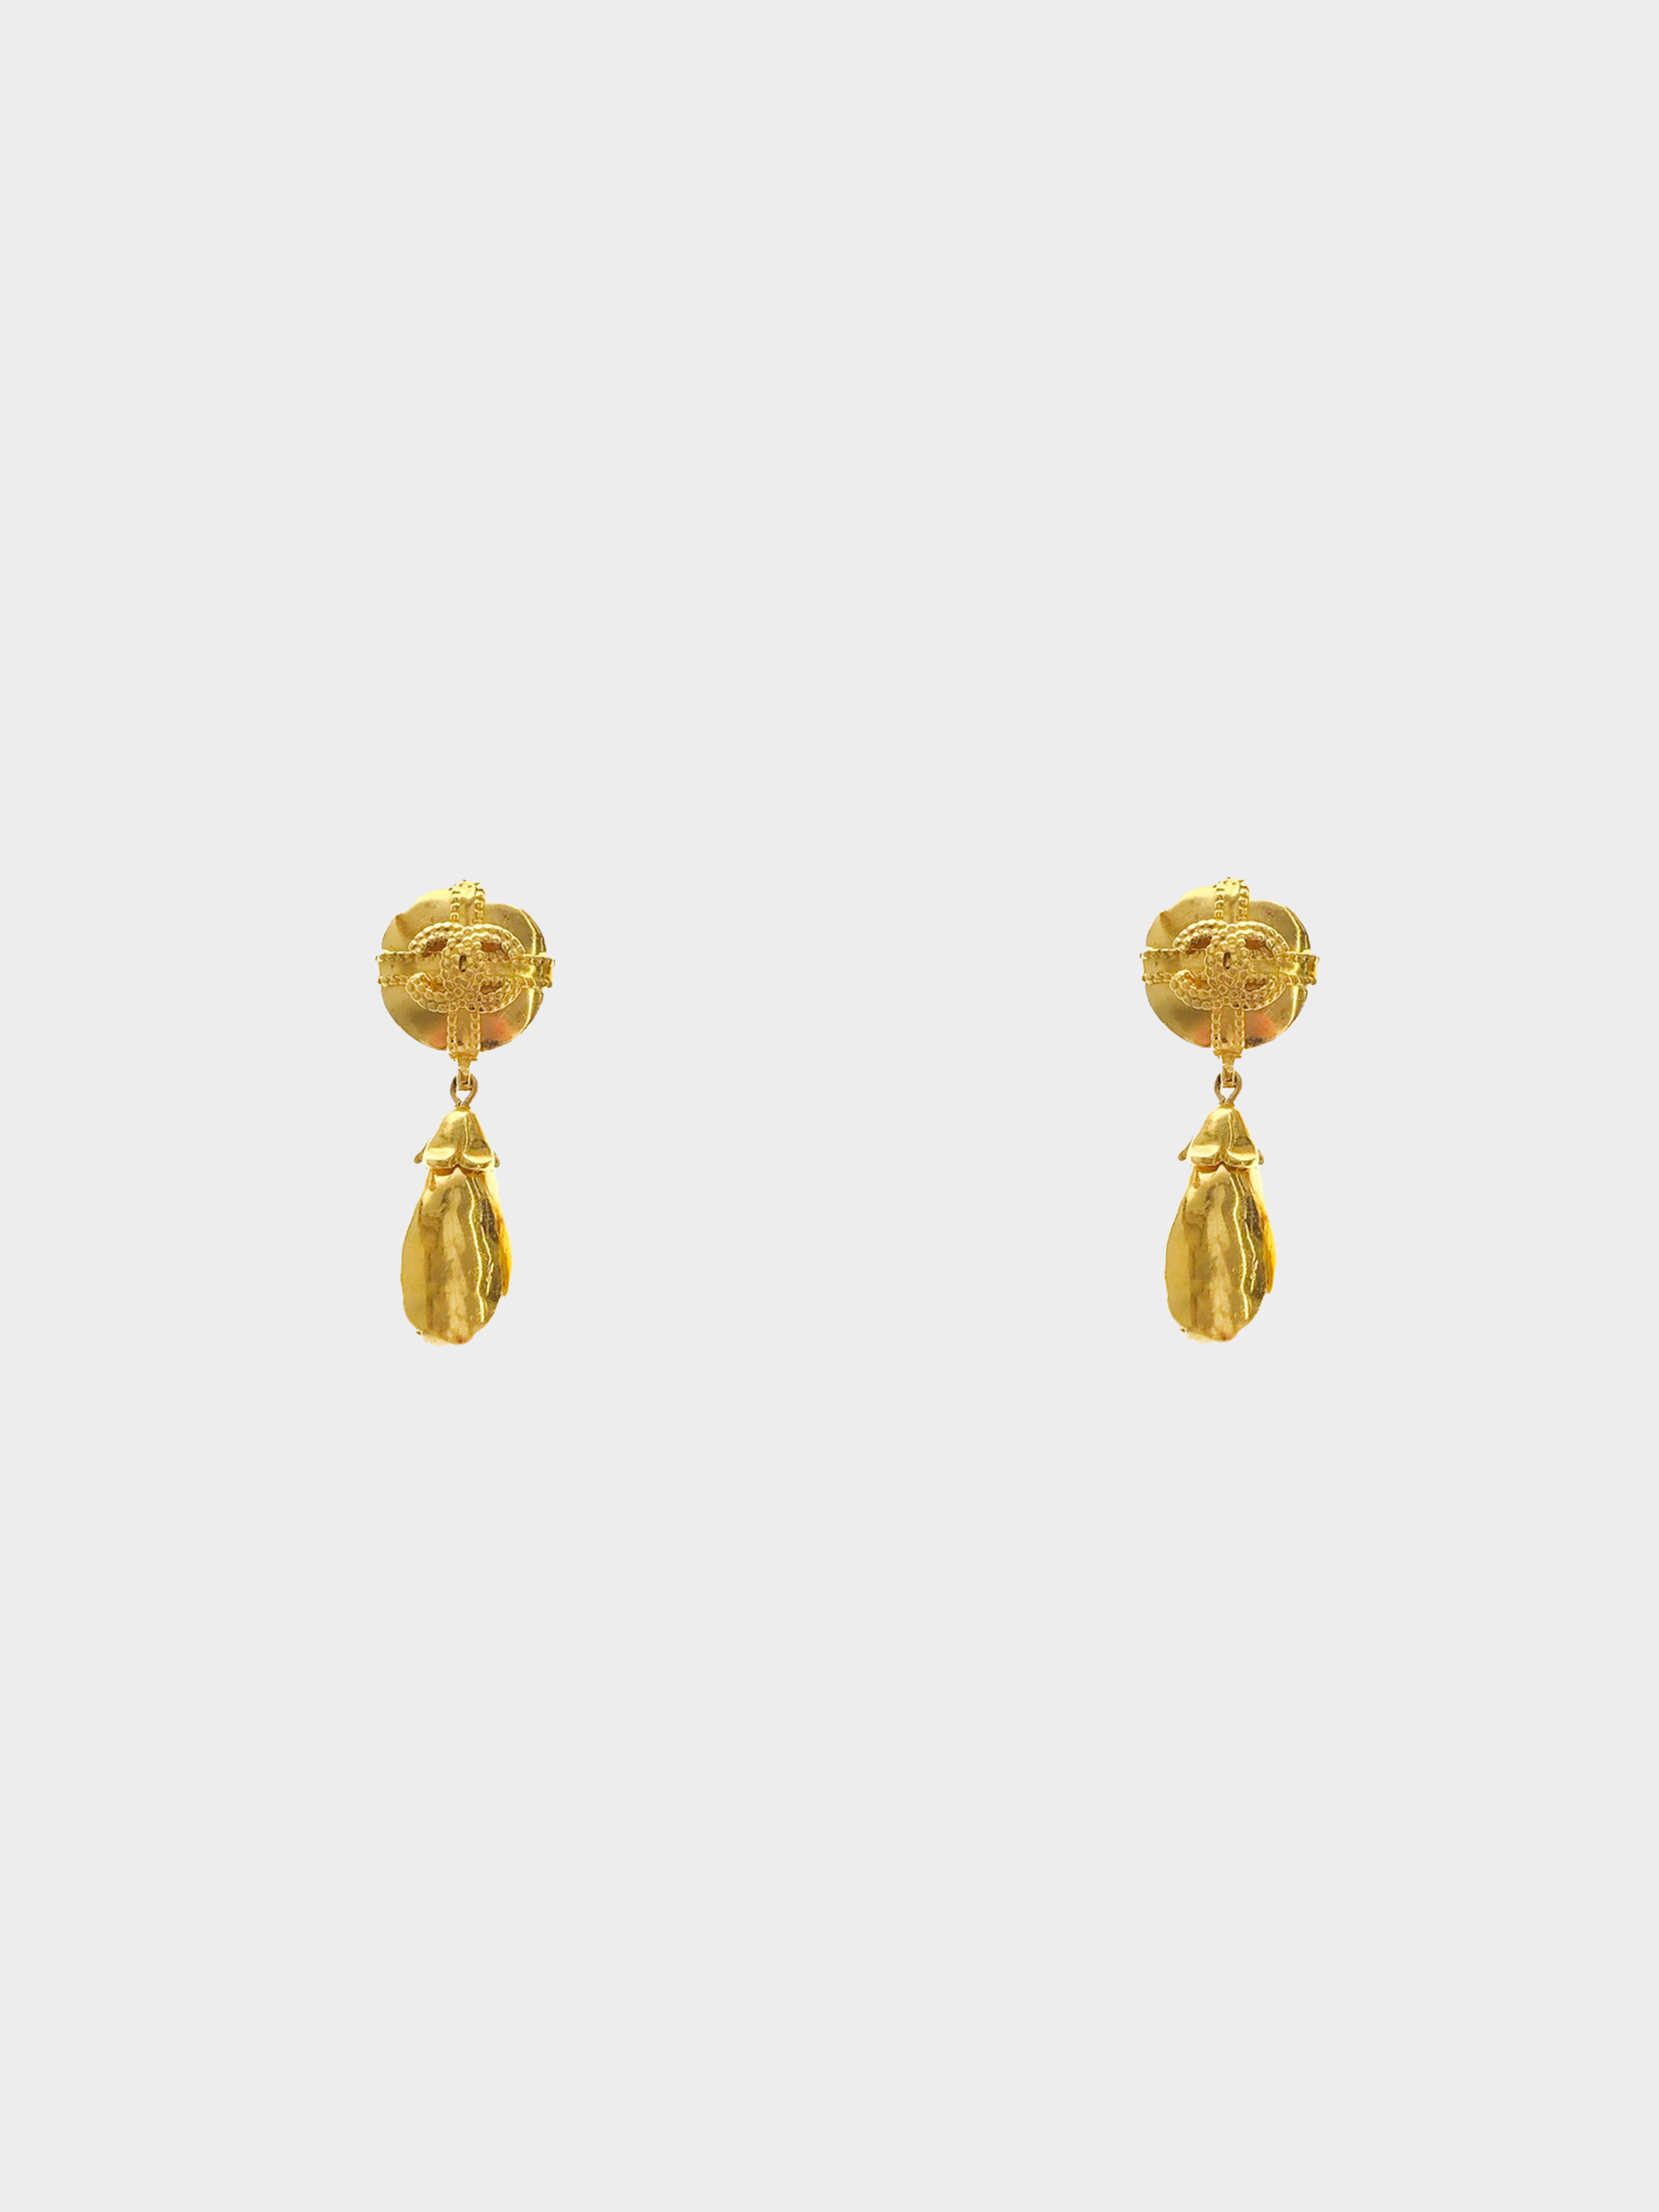 Chanel Fall 1997 Gold Pendant Earrings